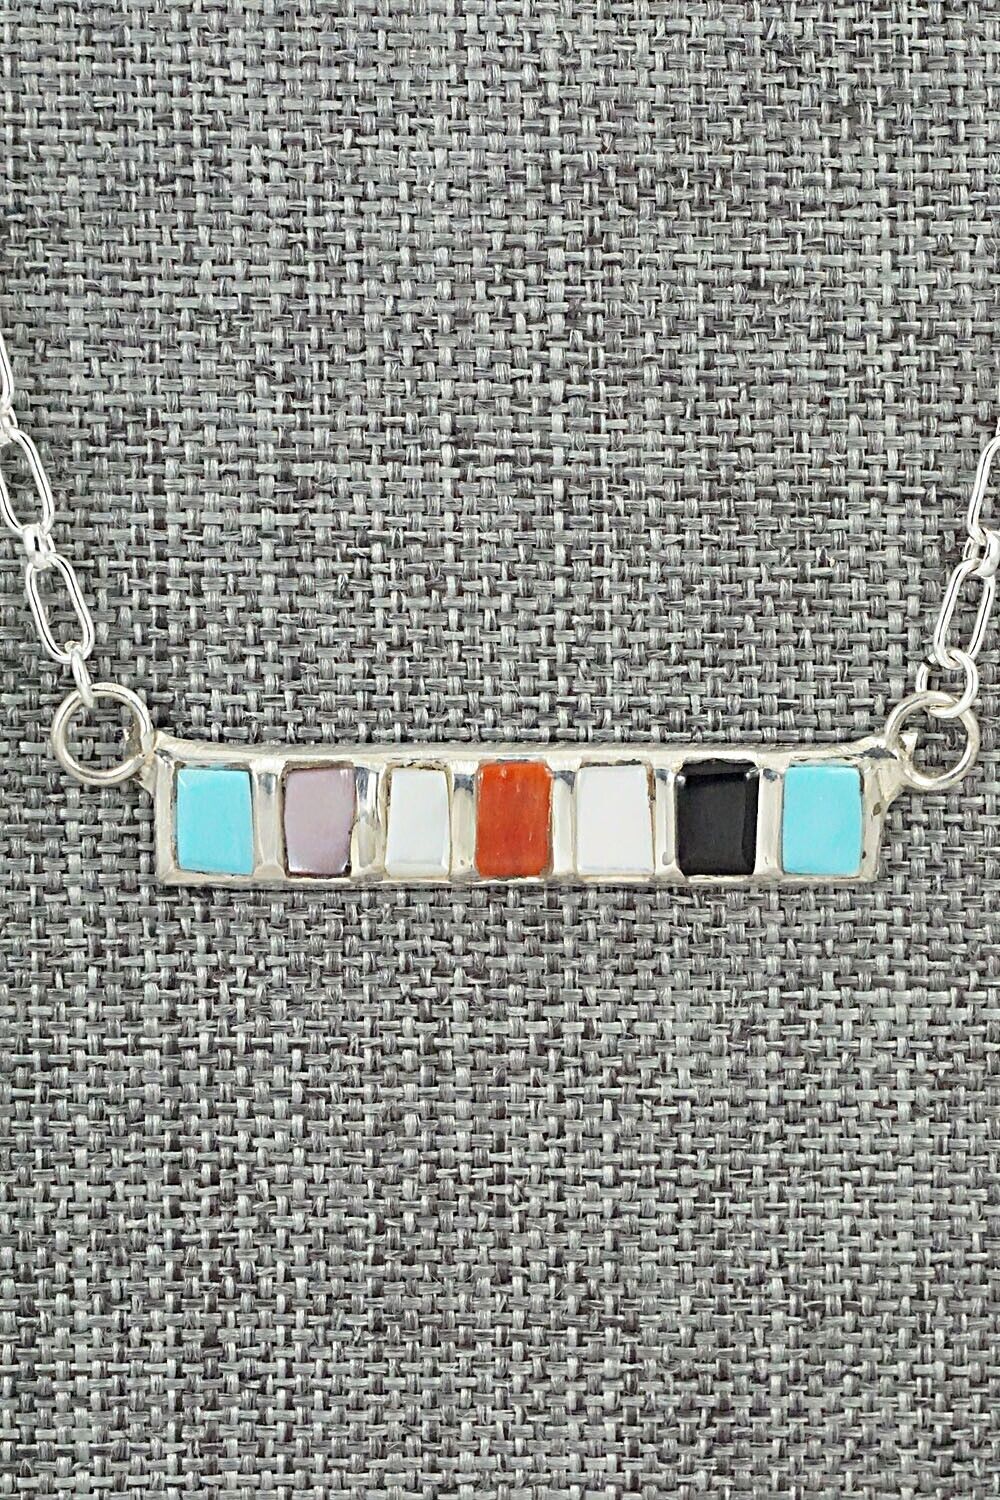 Multi-Stone & Sterling Silver Necklace - Glennetta Luna